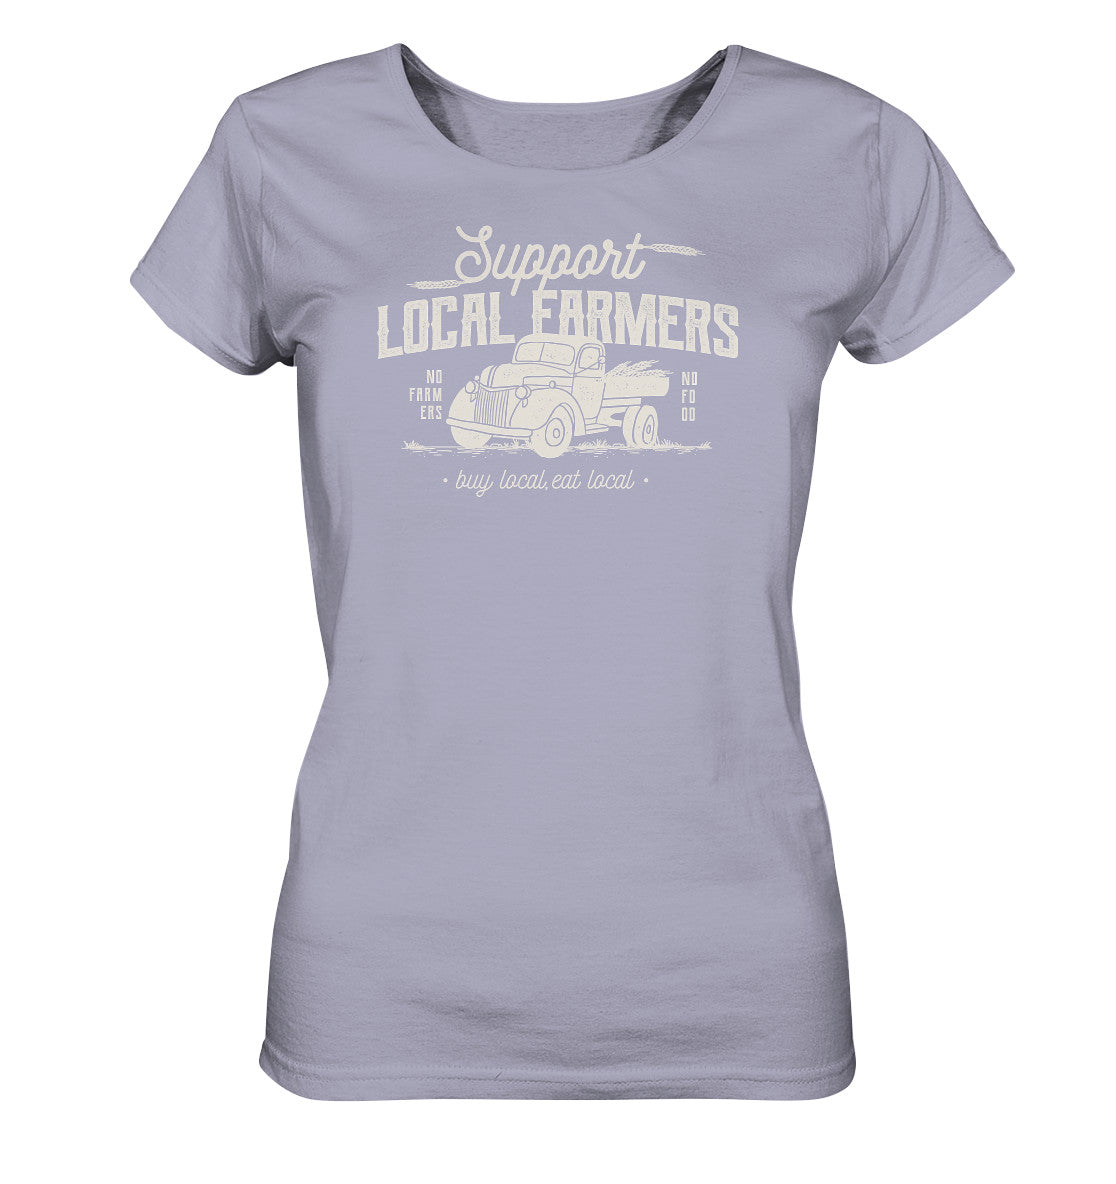 Support local Farmers. Retro Shirt Landwirt. No Farmers no food. Dorfkram® lavendel lila